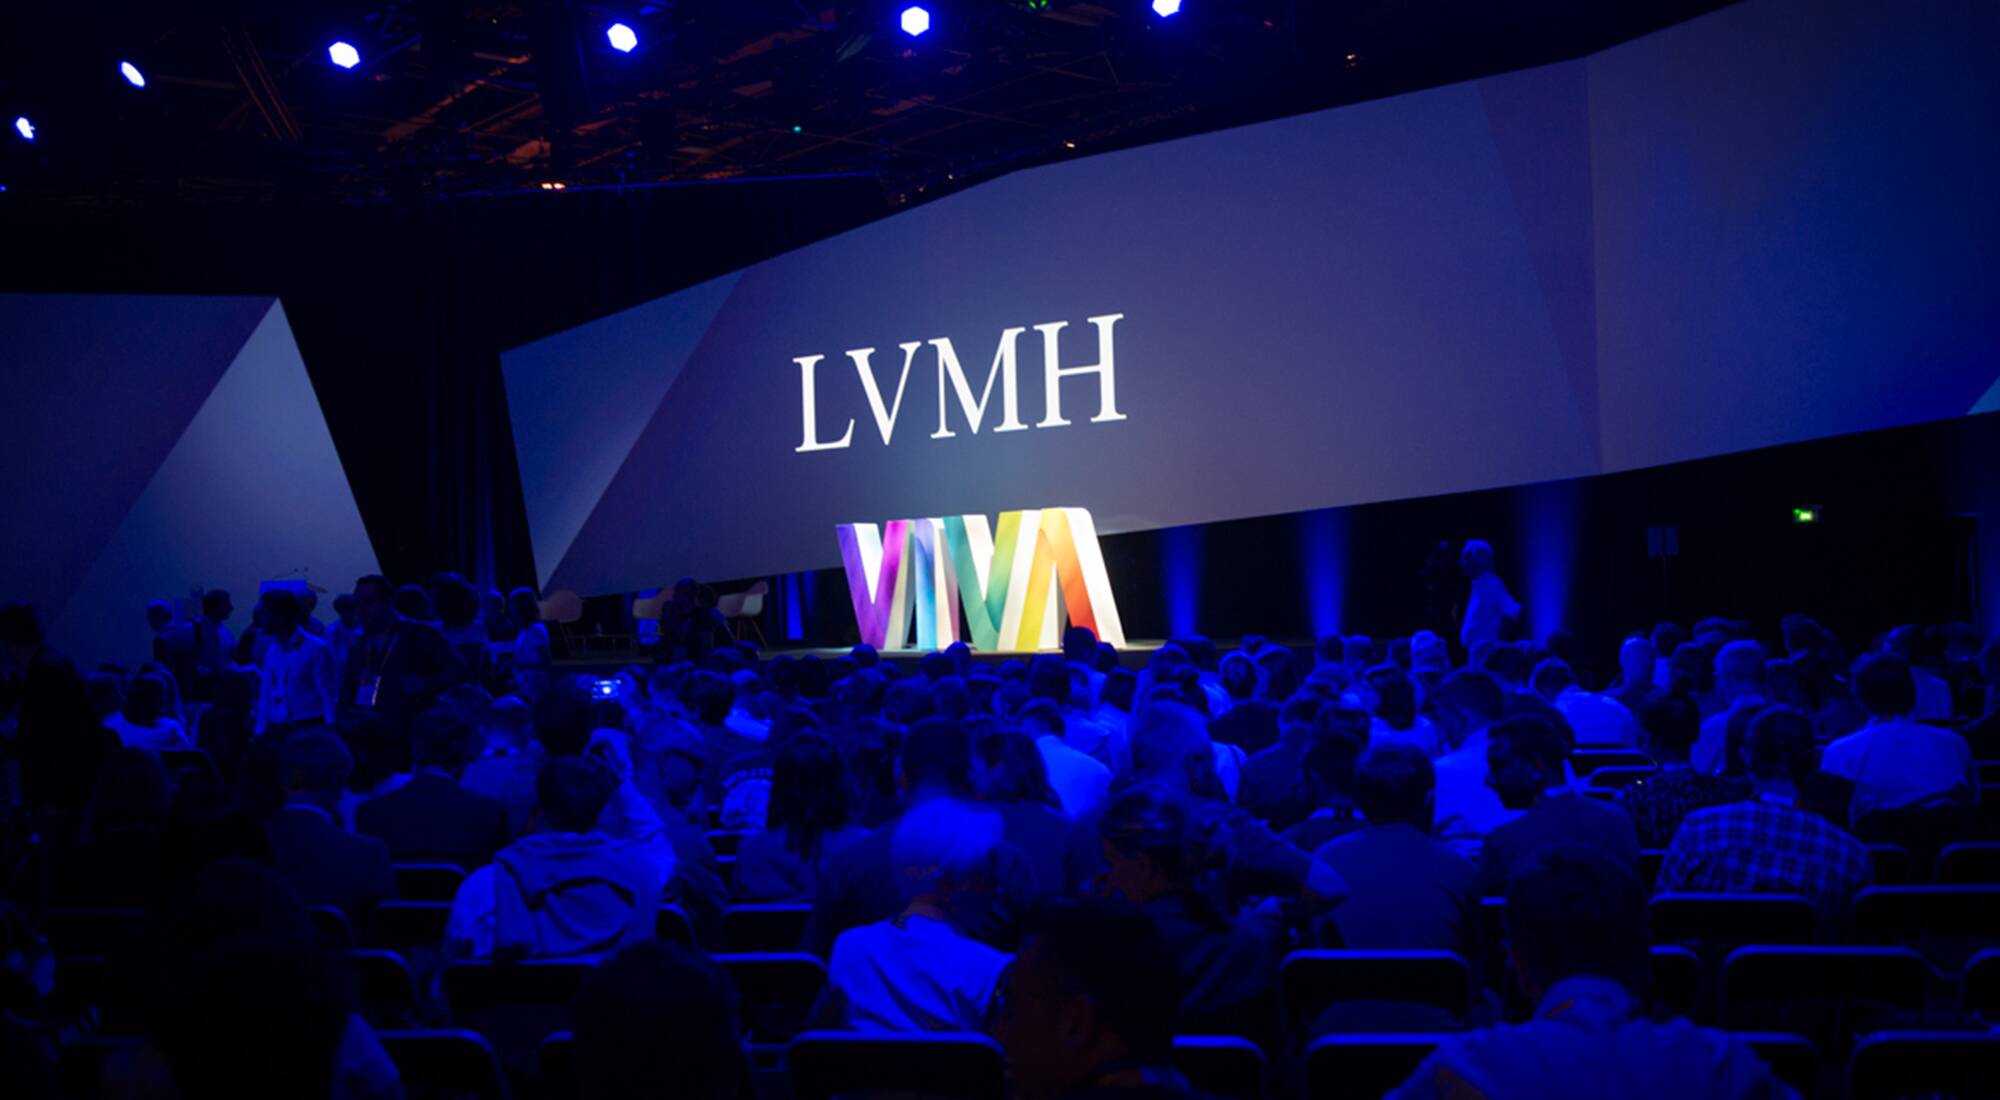 LVMH Live Panel - Career & Mobility - 10/22/2020 on Vimeo